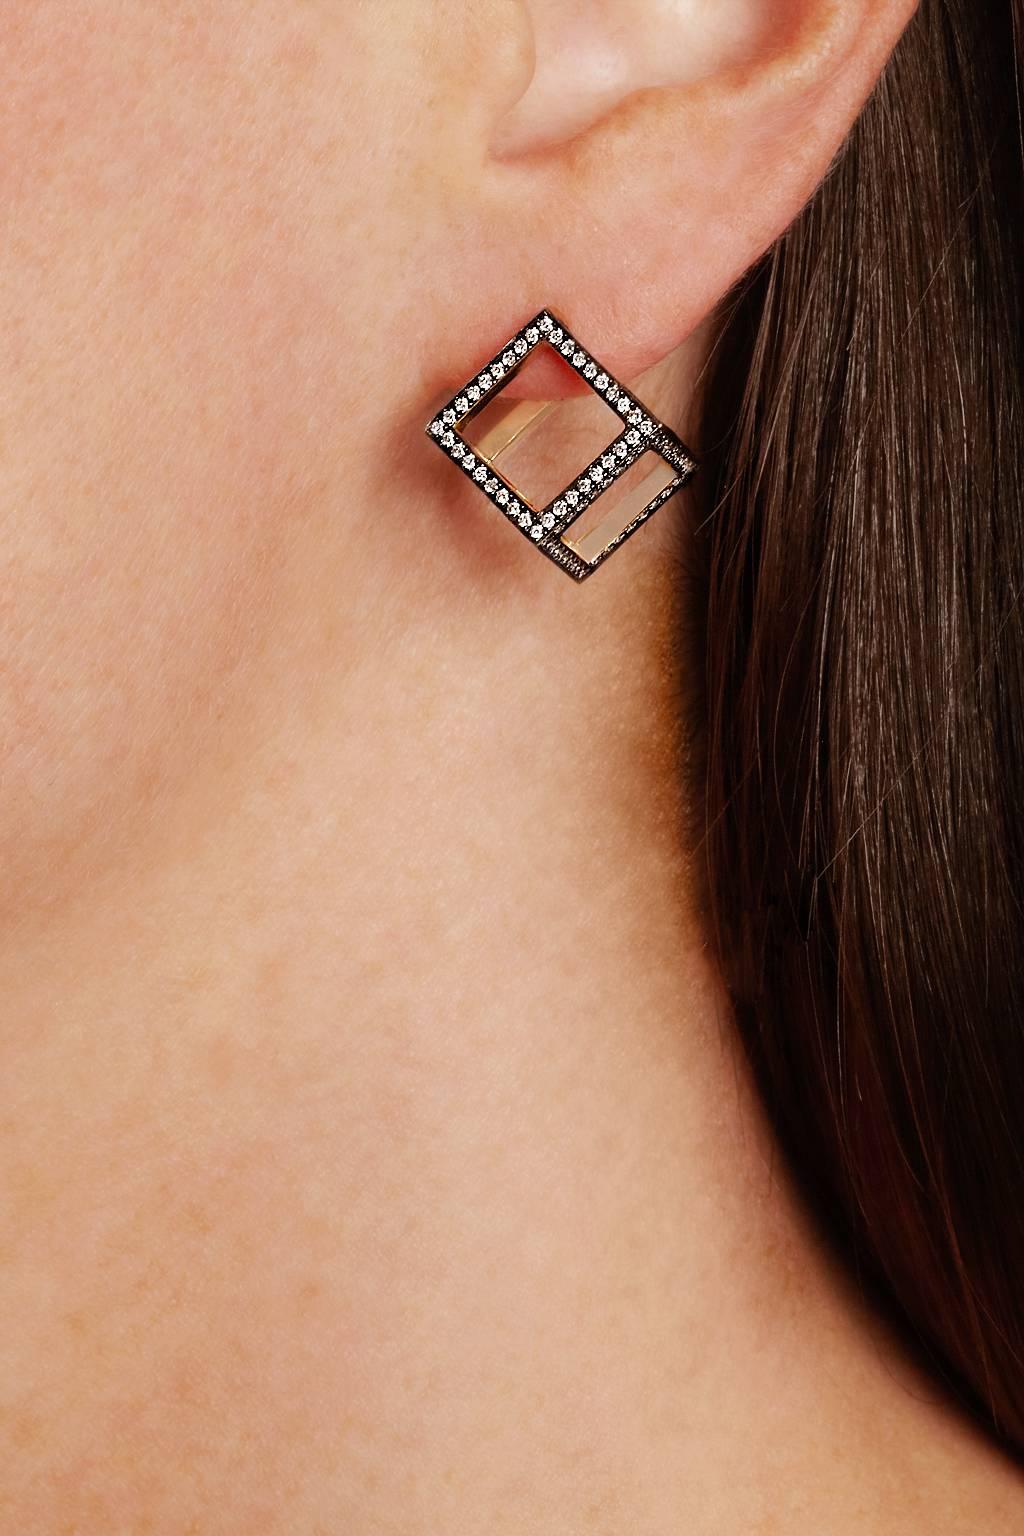 Noor Fares - GEOMETRY 101 Cube Dormeuse “3D” Earrings  
. Yellow Gold & Black Rhodium
. White Diamonds